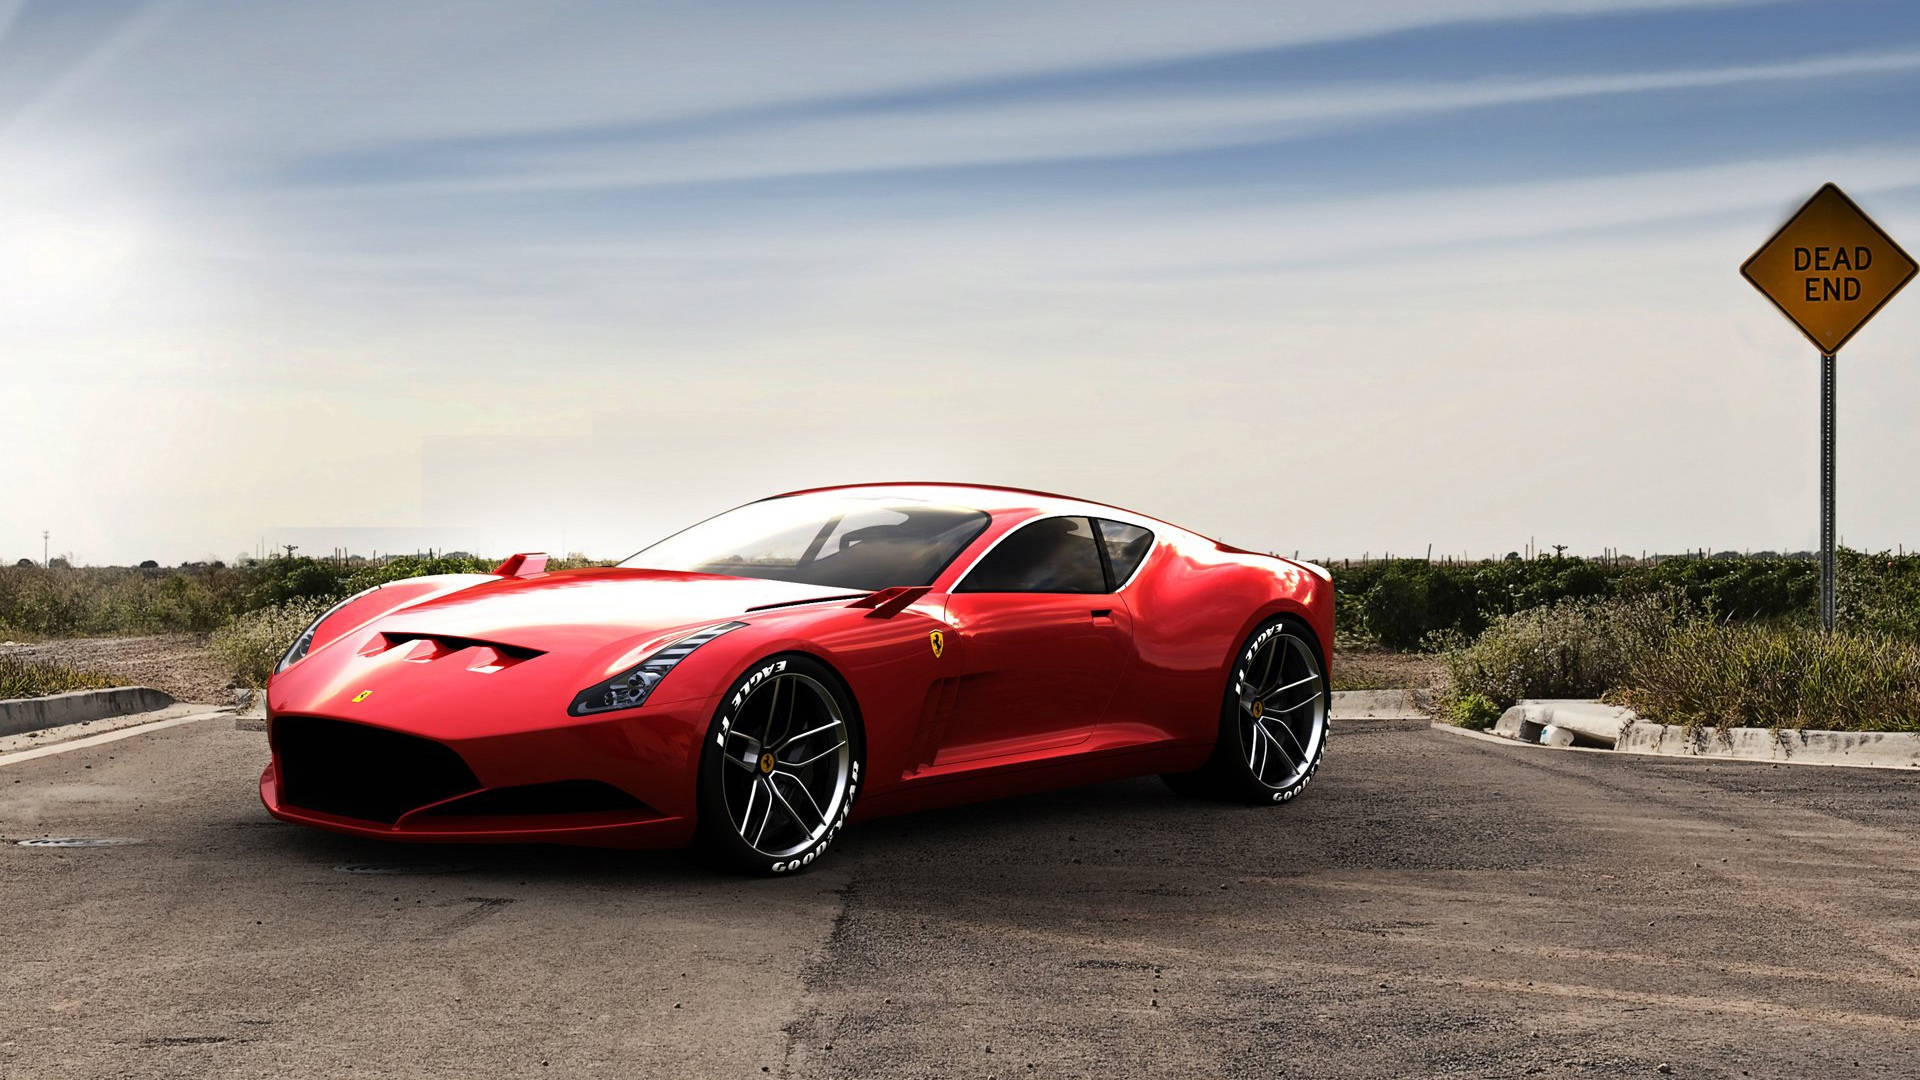 "Feel the power of a Ferrari" Wallpaper